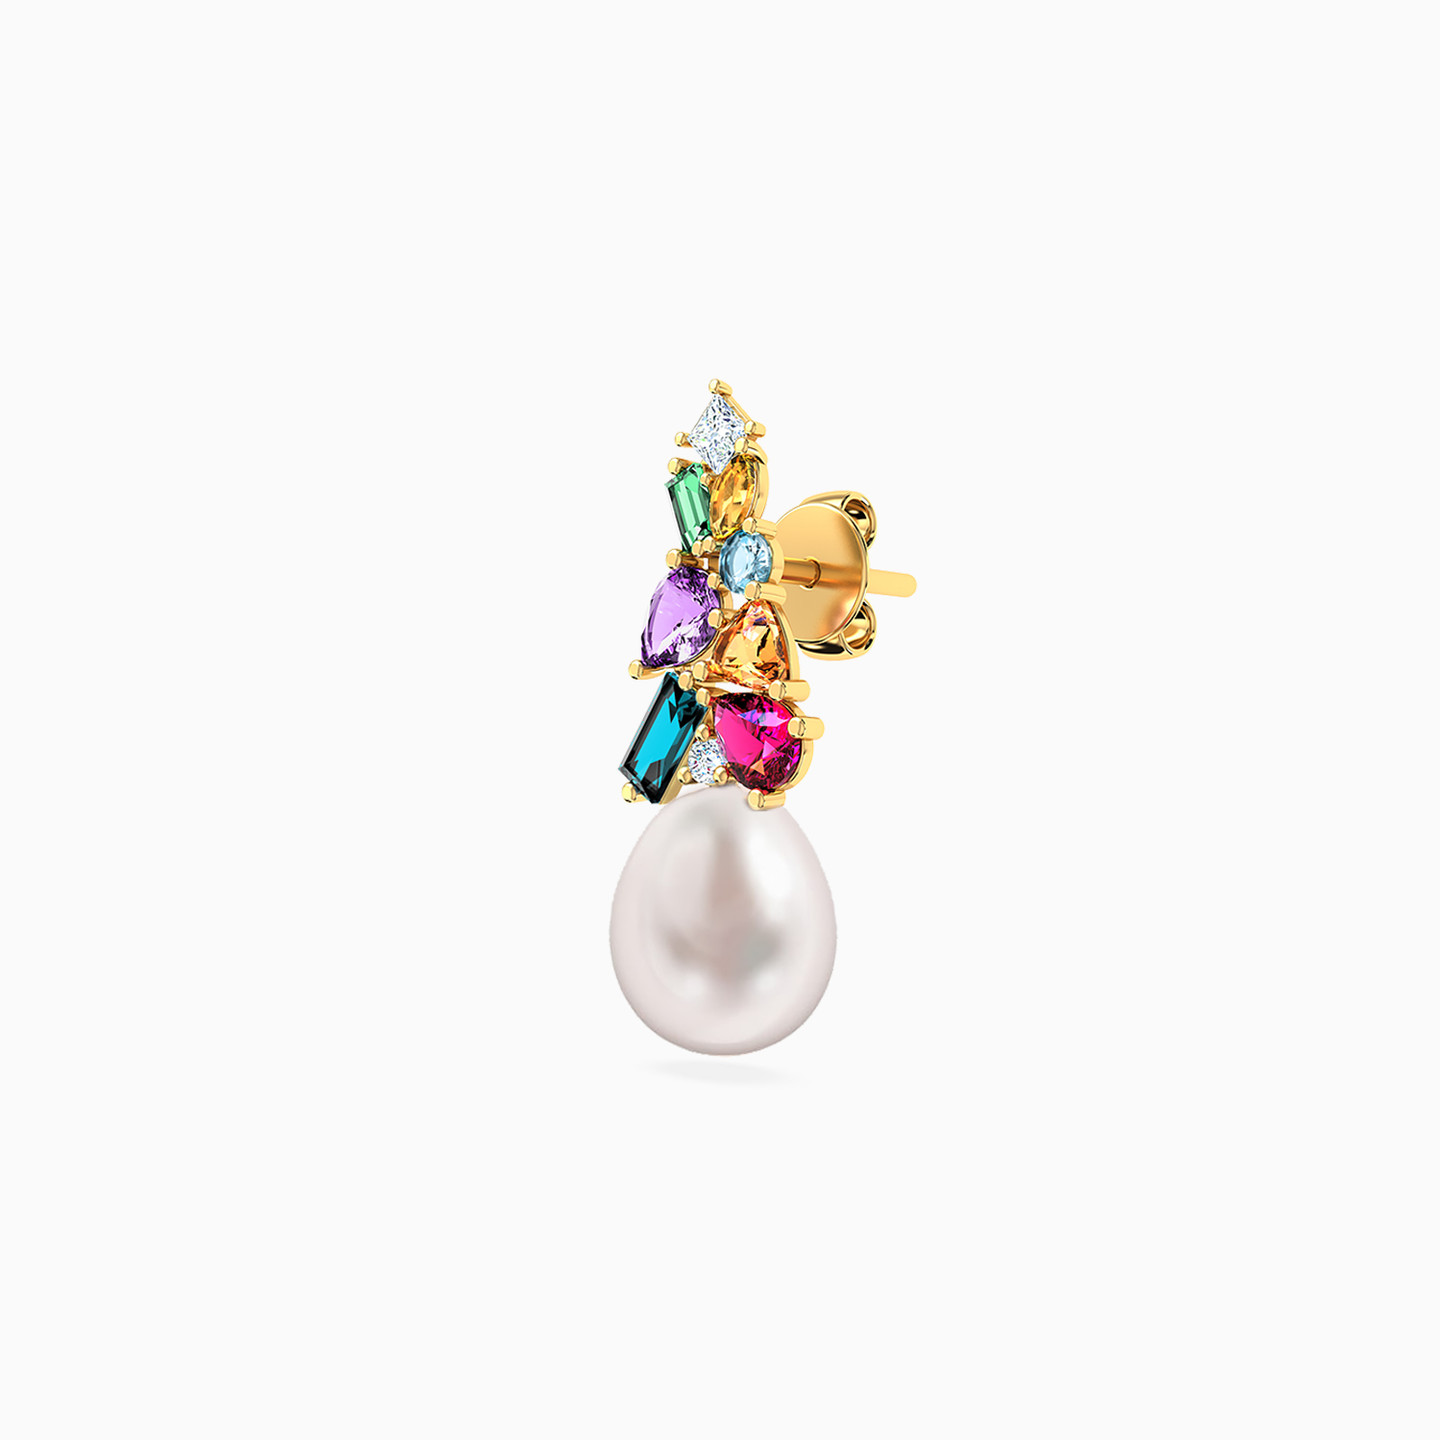 18K Gold Pearls & Colored Stones Stud Earrings - 3